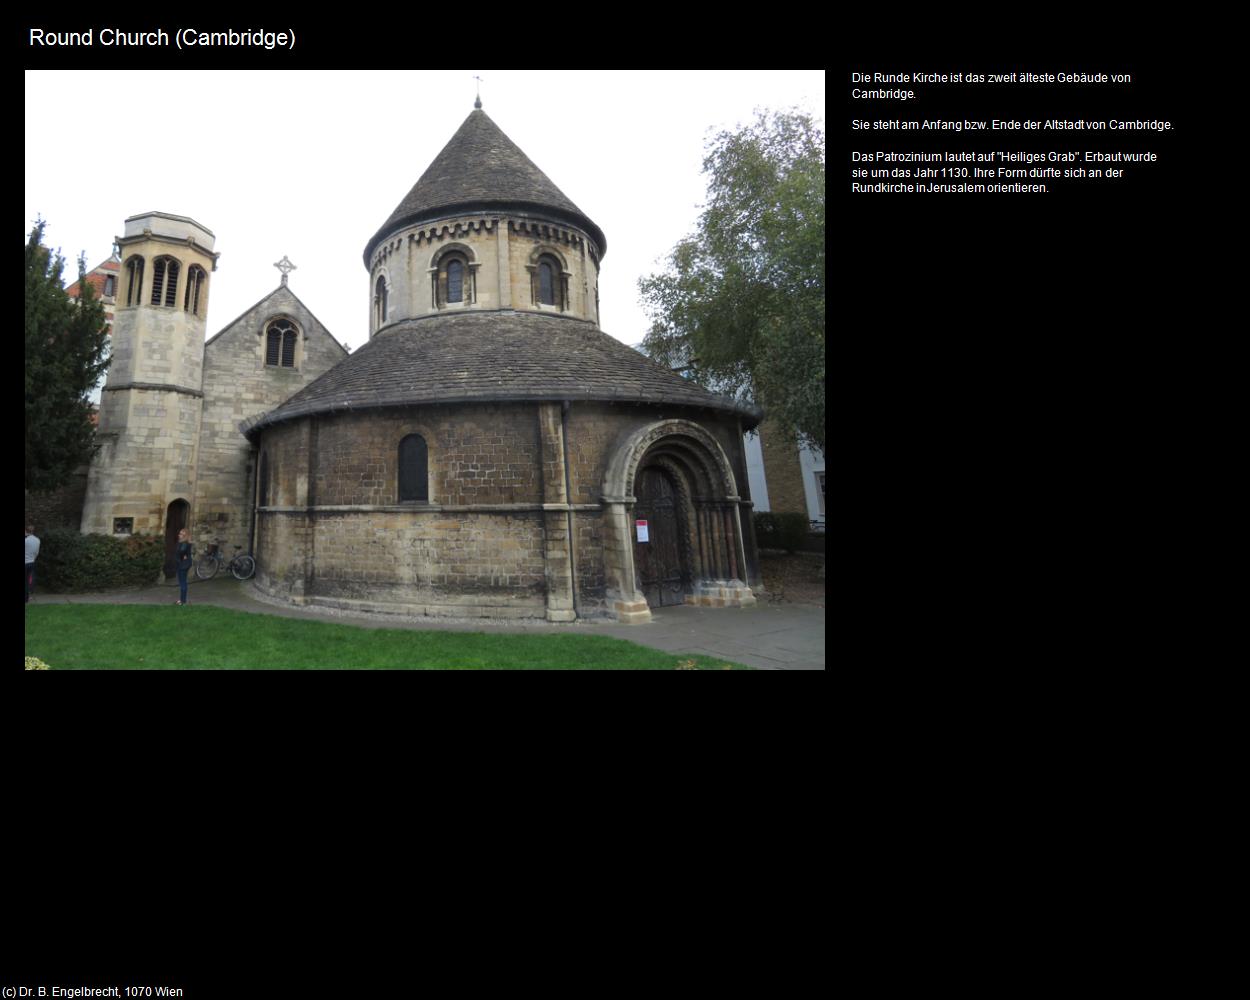 Round Church (Cambridge, England) in Kulturatlas-ENGLAND und WALES